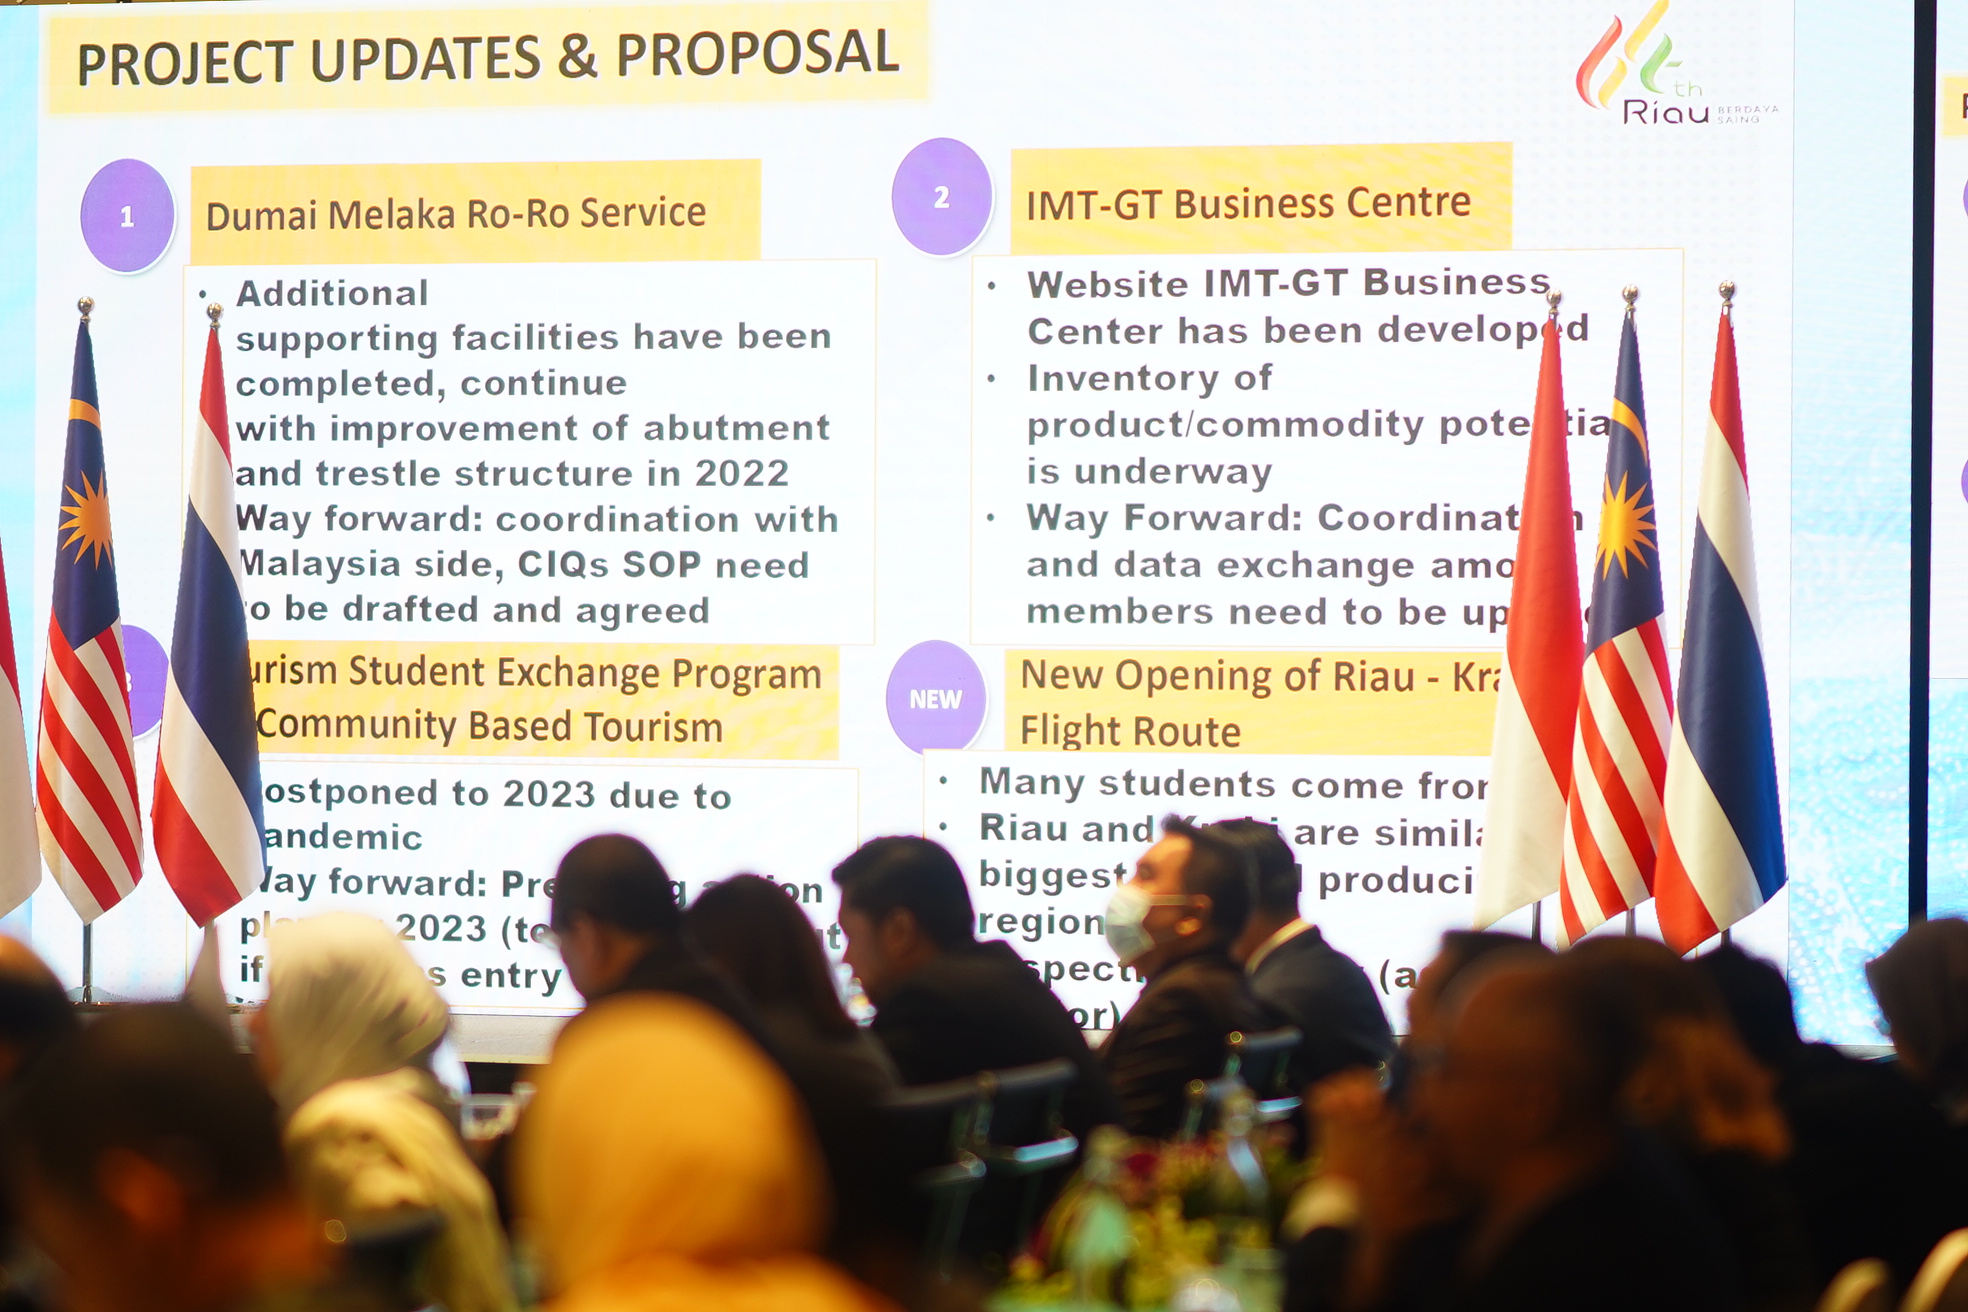 Roro Dumai - Melaka Jadi Pembahasan Prioritas Forum IMT-GT Thailand